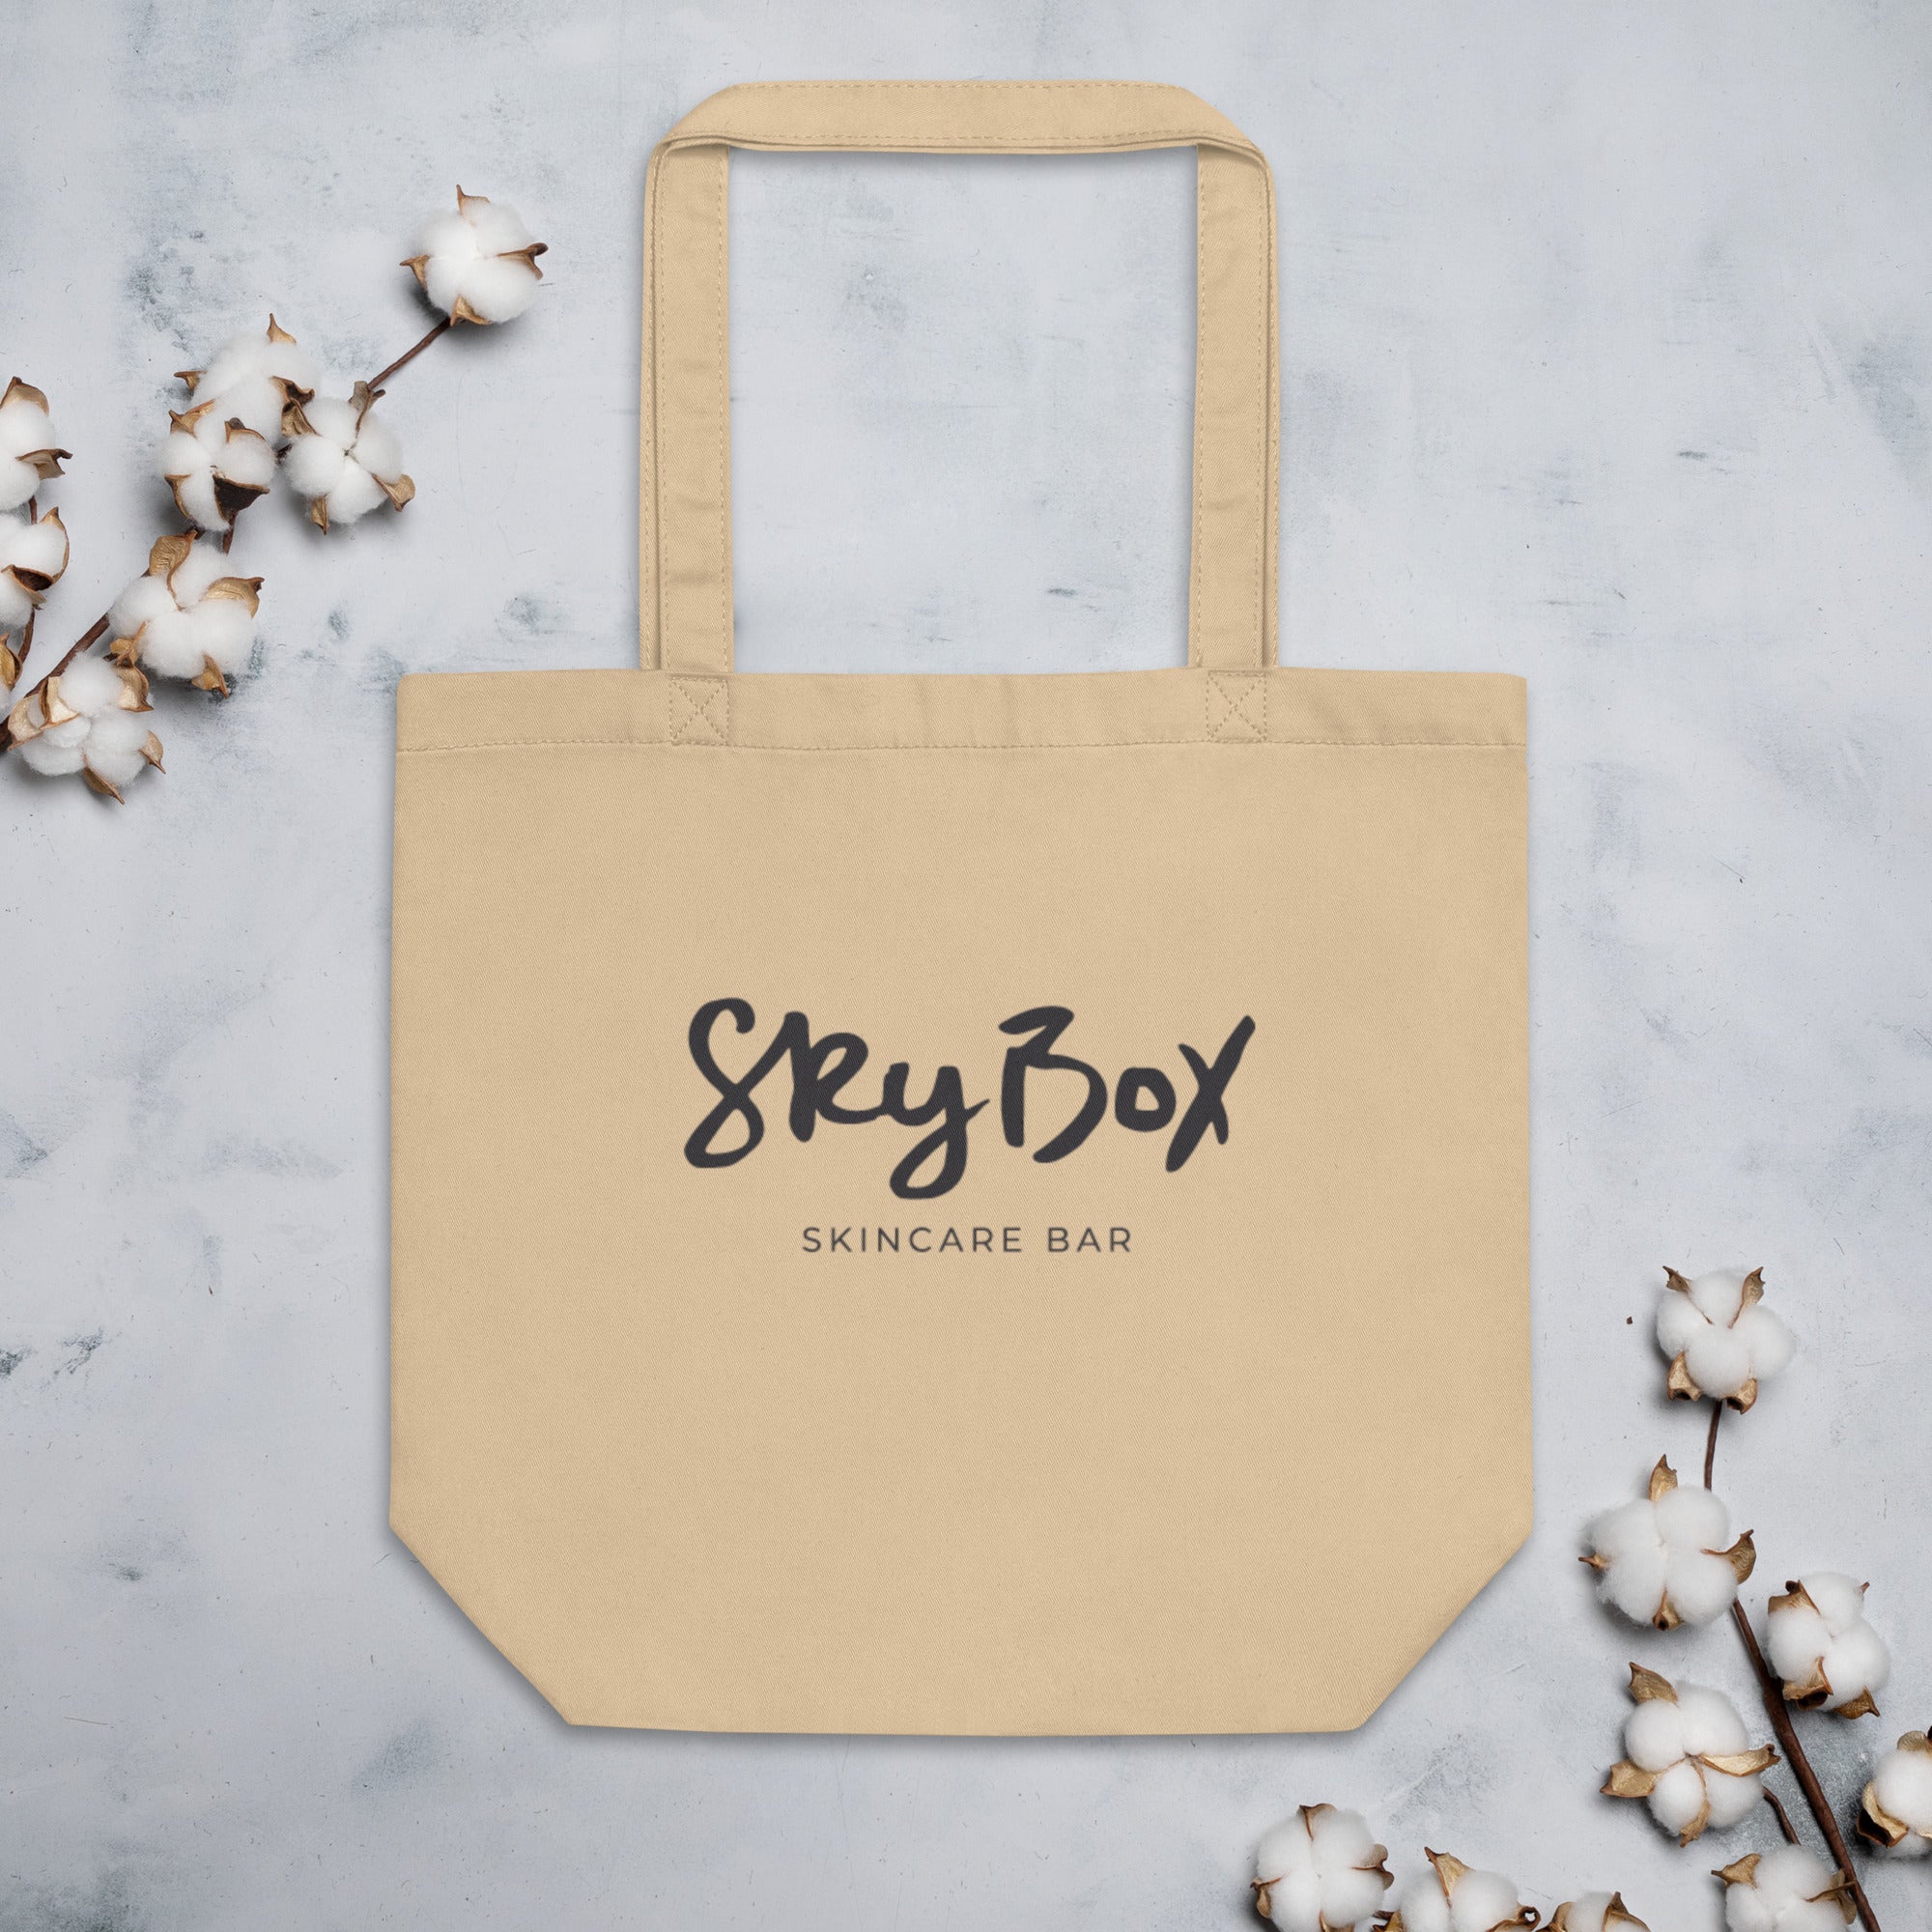 Skybox Skincare Eco Tote Bag – Skybox Skincare Bar